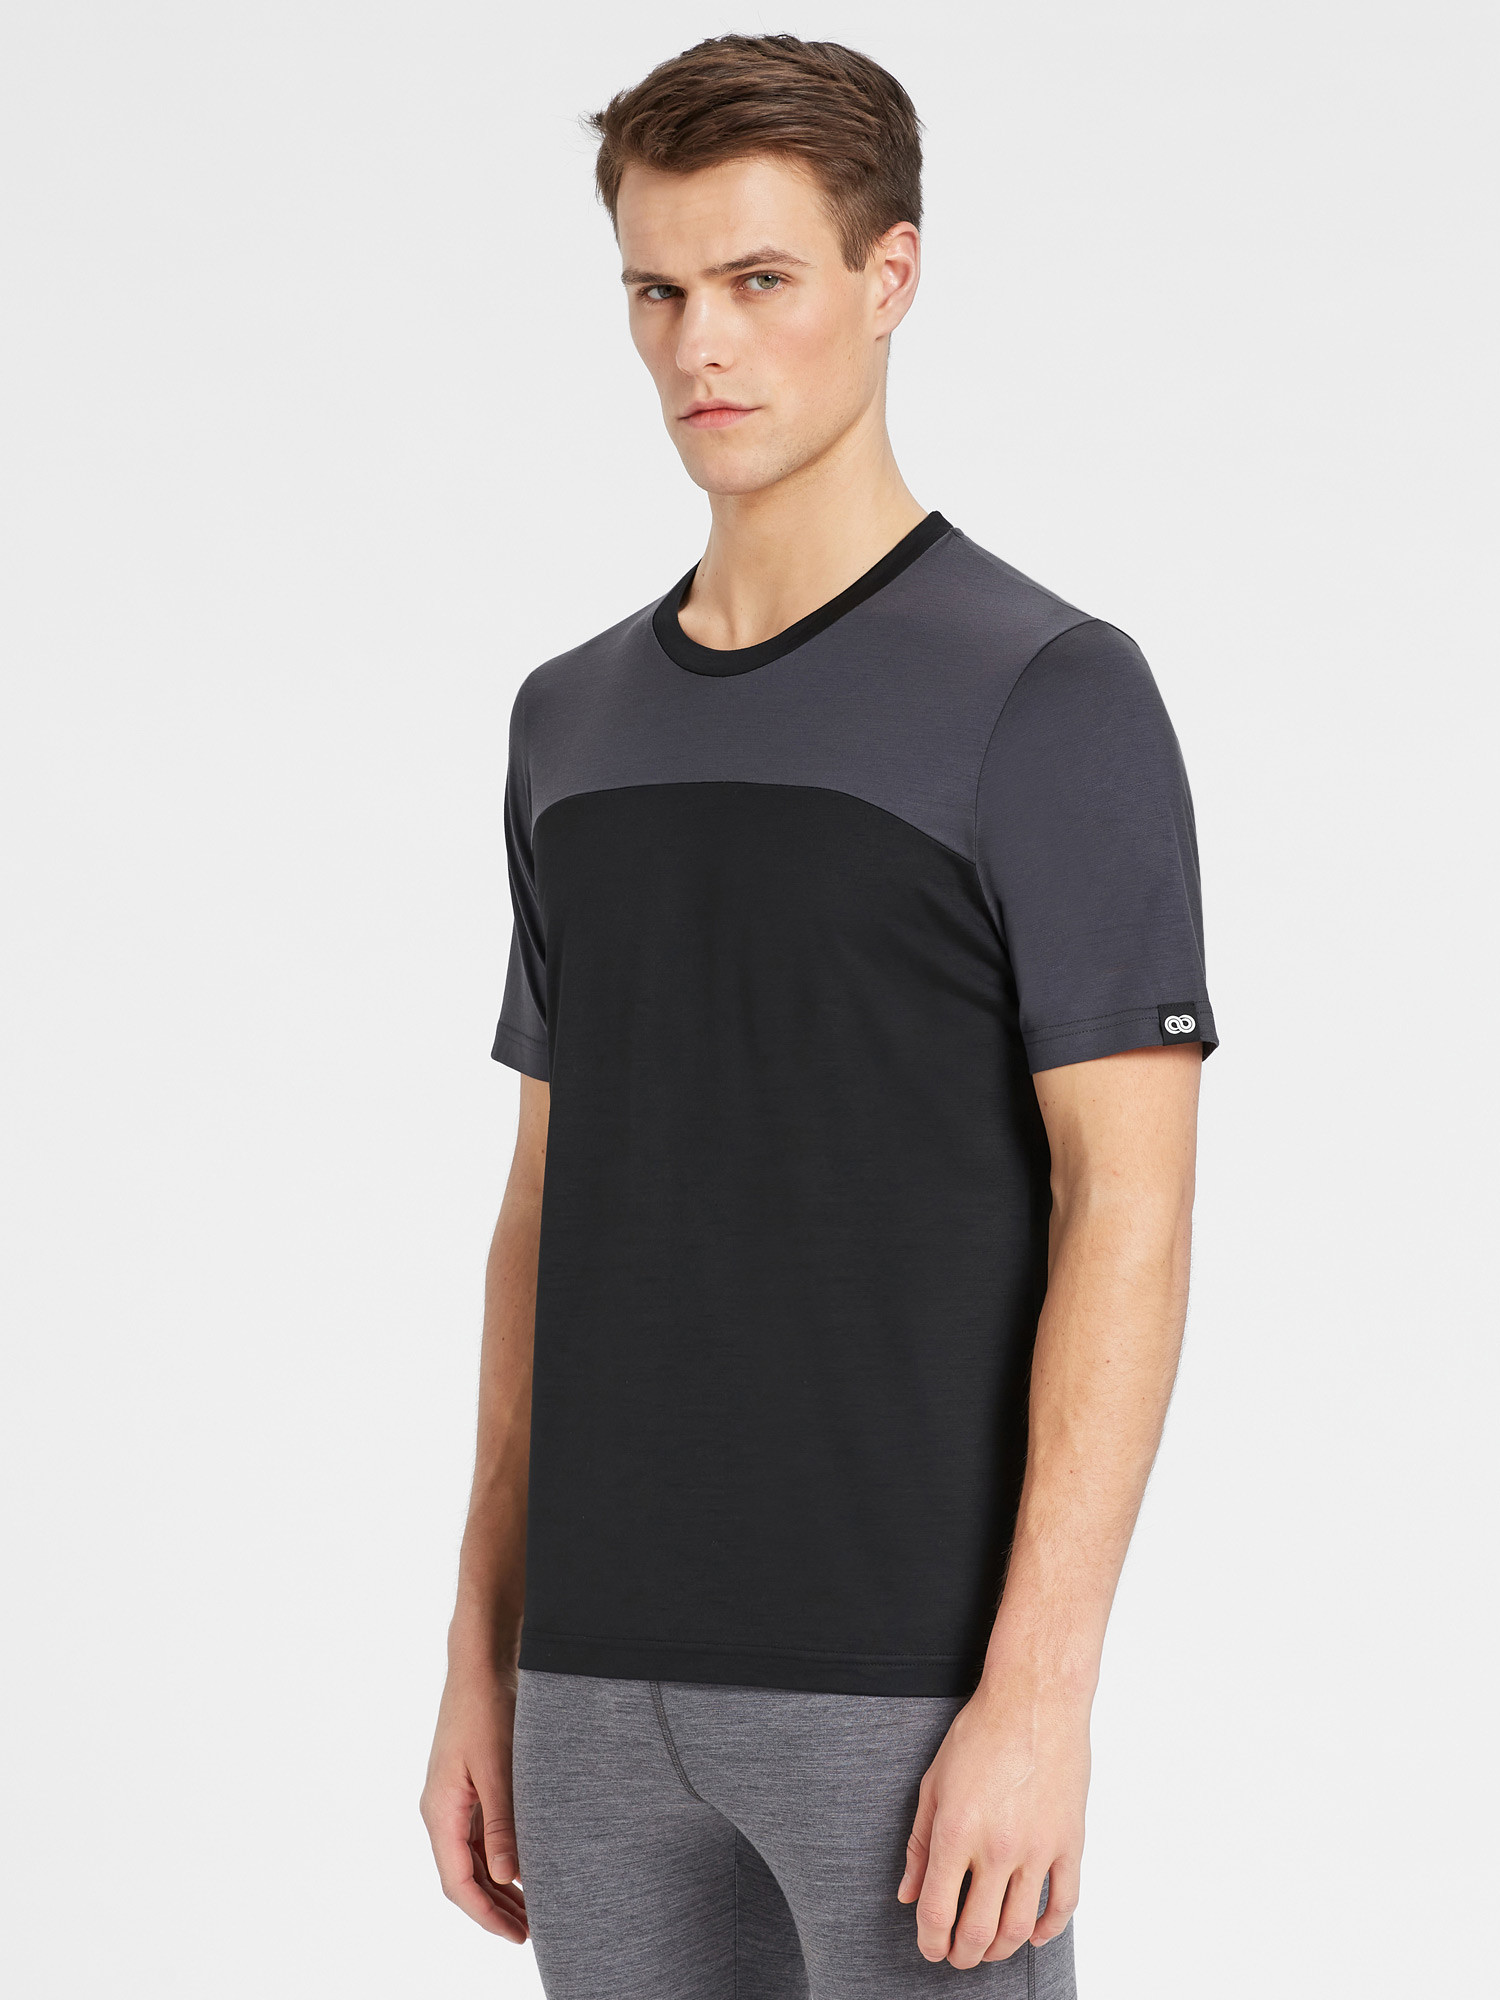 Rewoolution HOBART Merino Jersey T-Shirt Black/Gray – Wool // Black